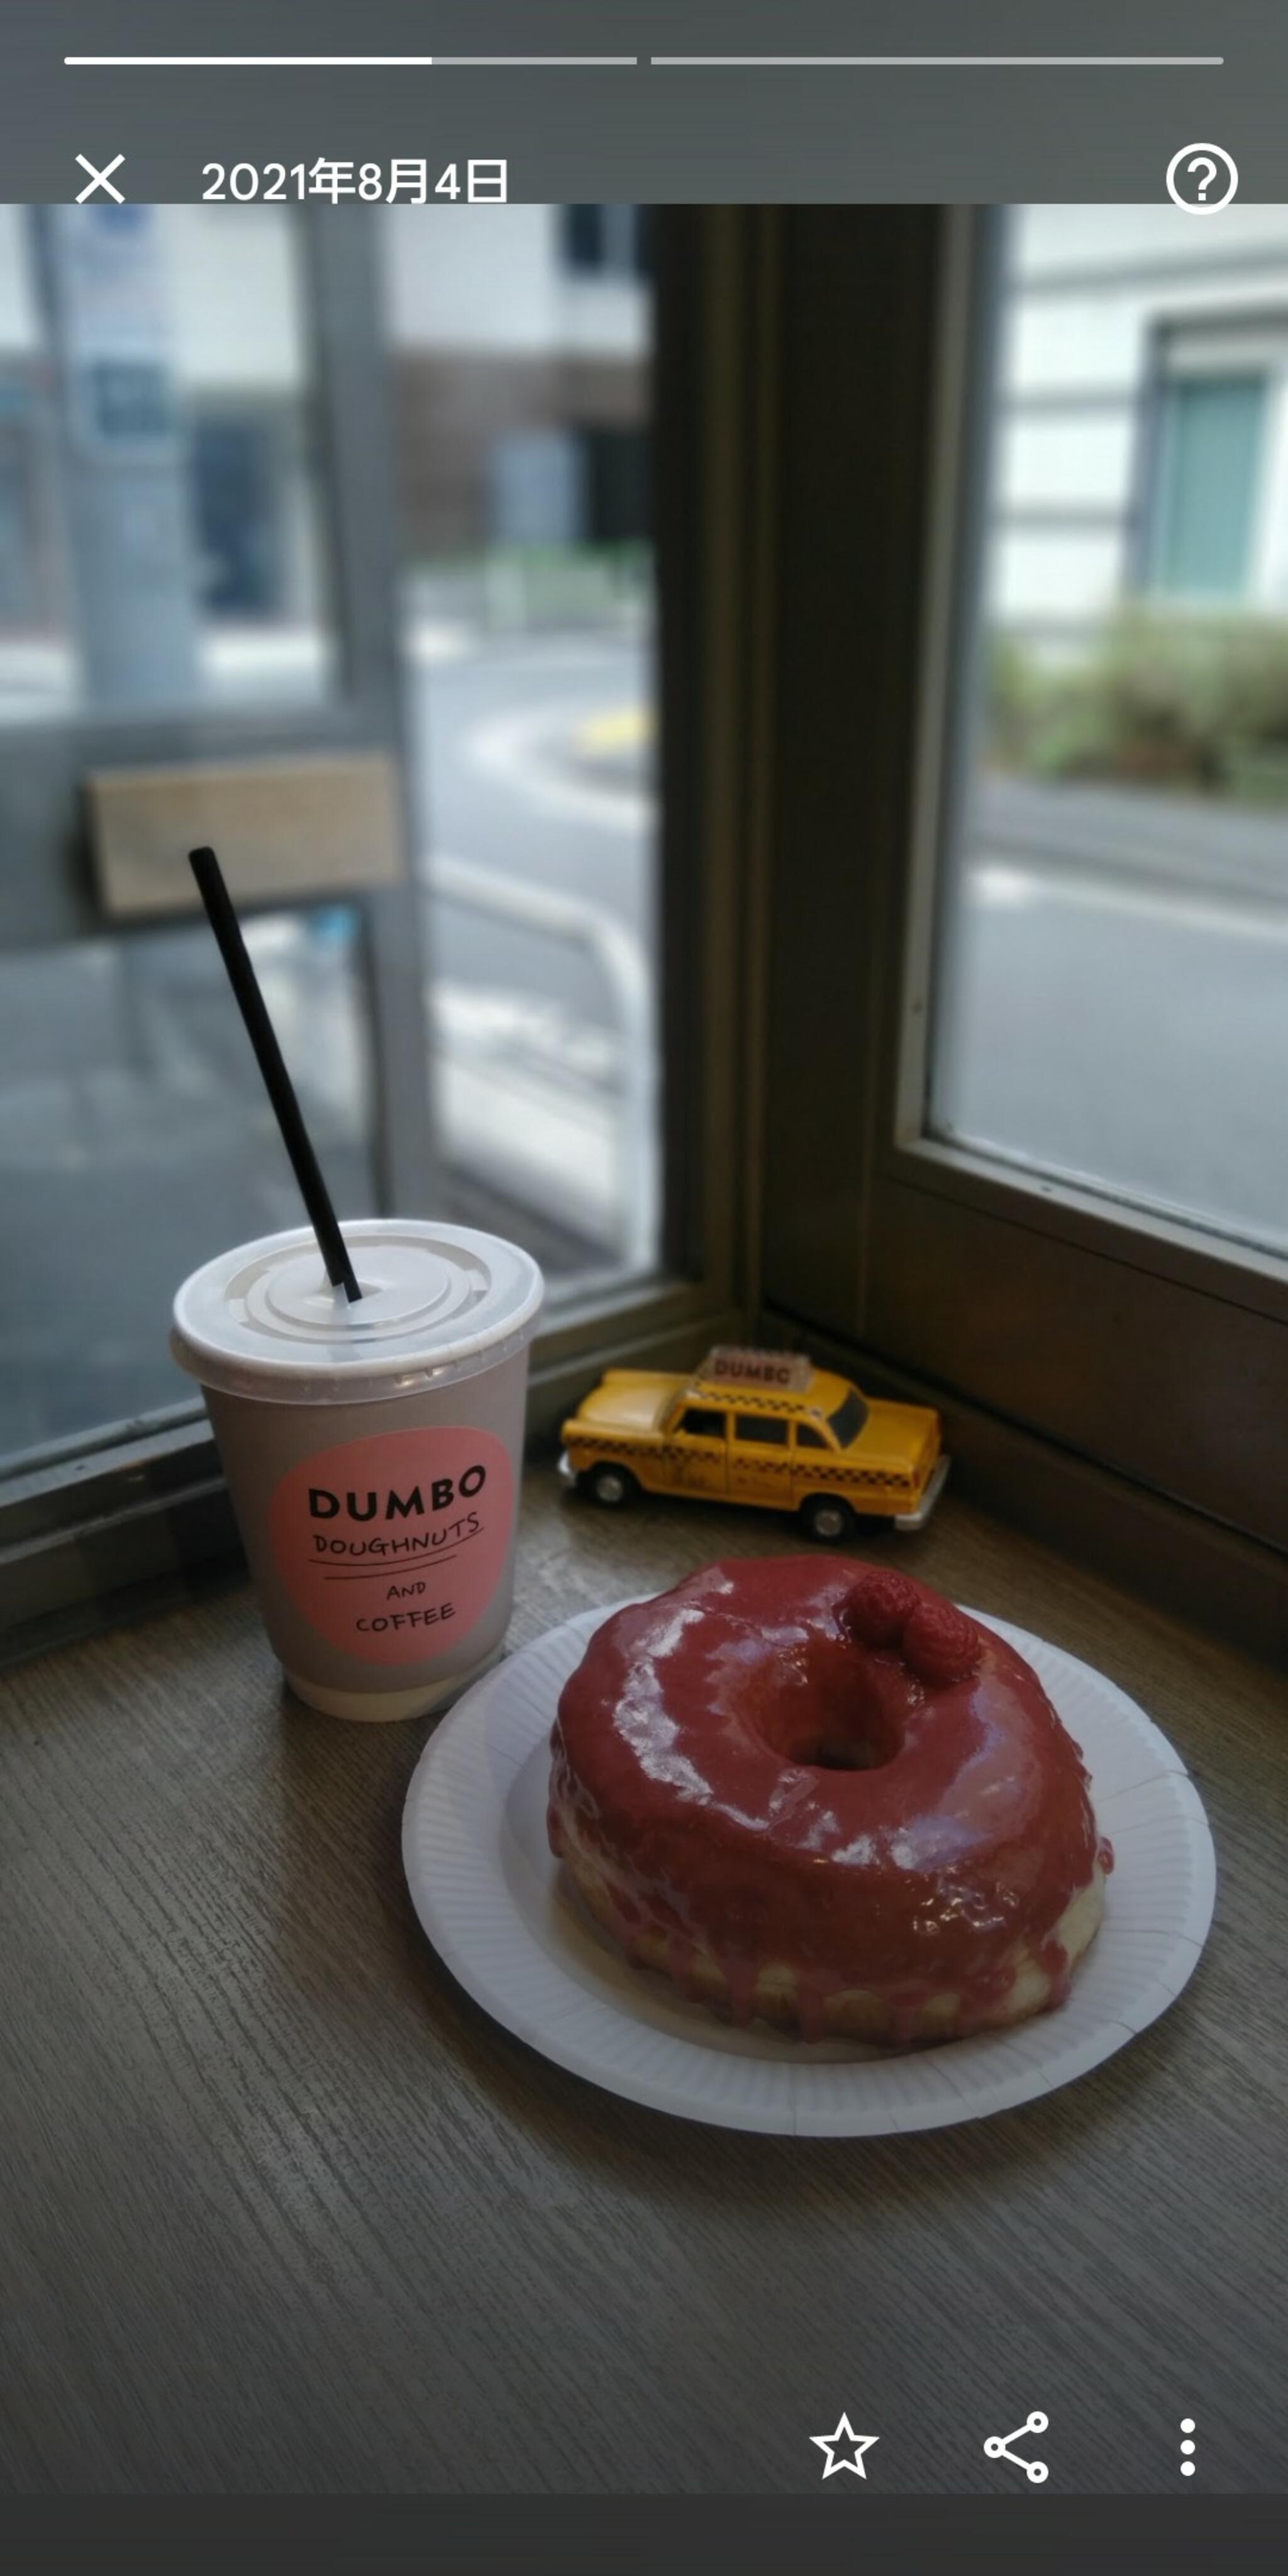 DUMBO Doughnuts and Coffeeの代表写真3